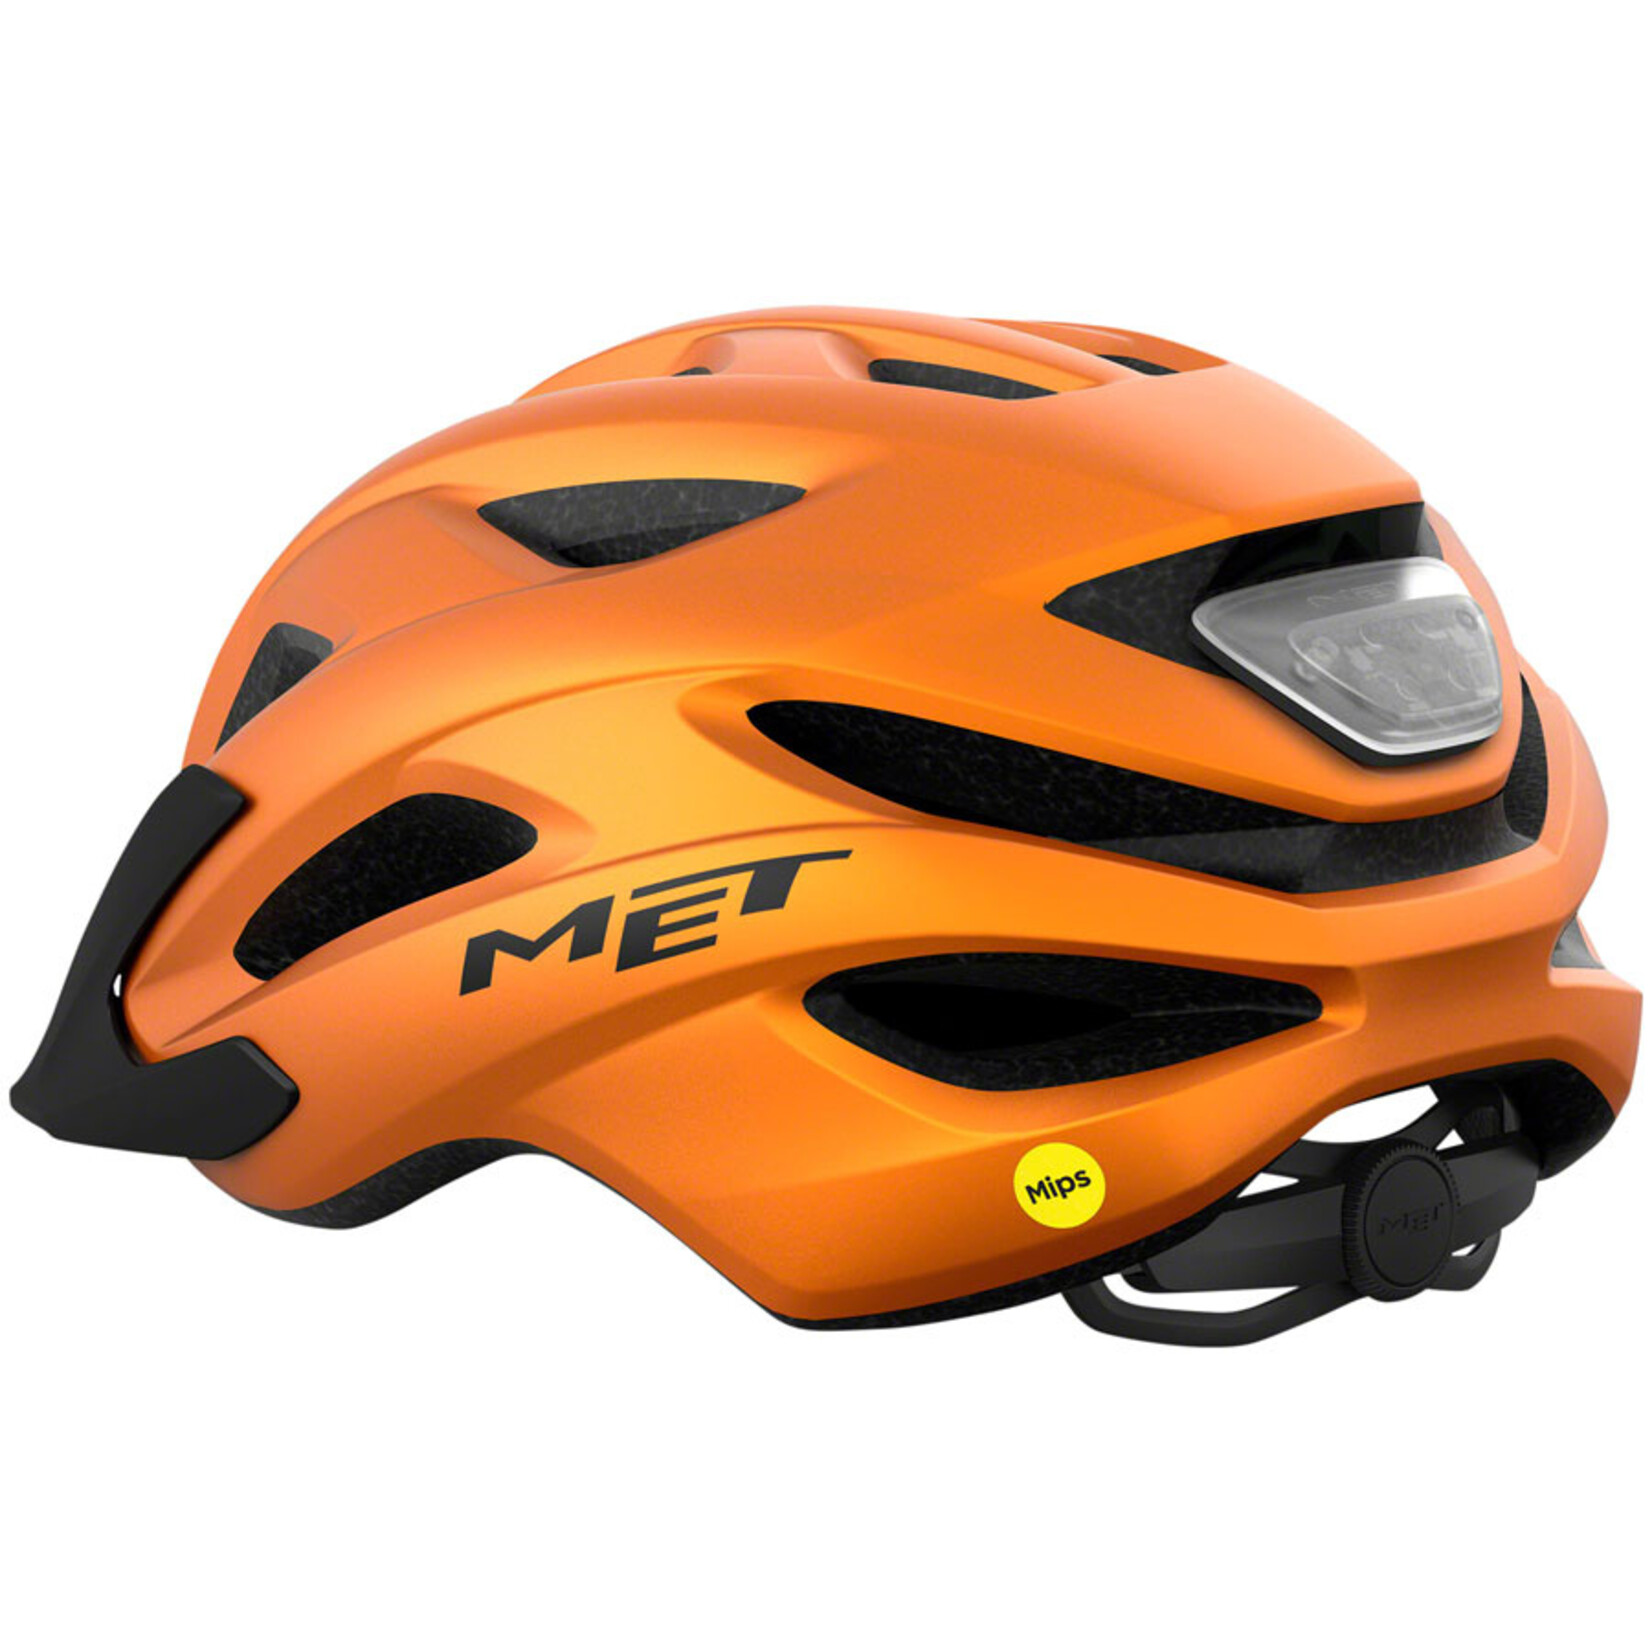 MET Helmets MET Crossover MIPS Helmet - Orange, One Size